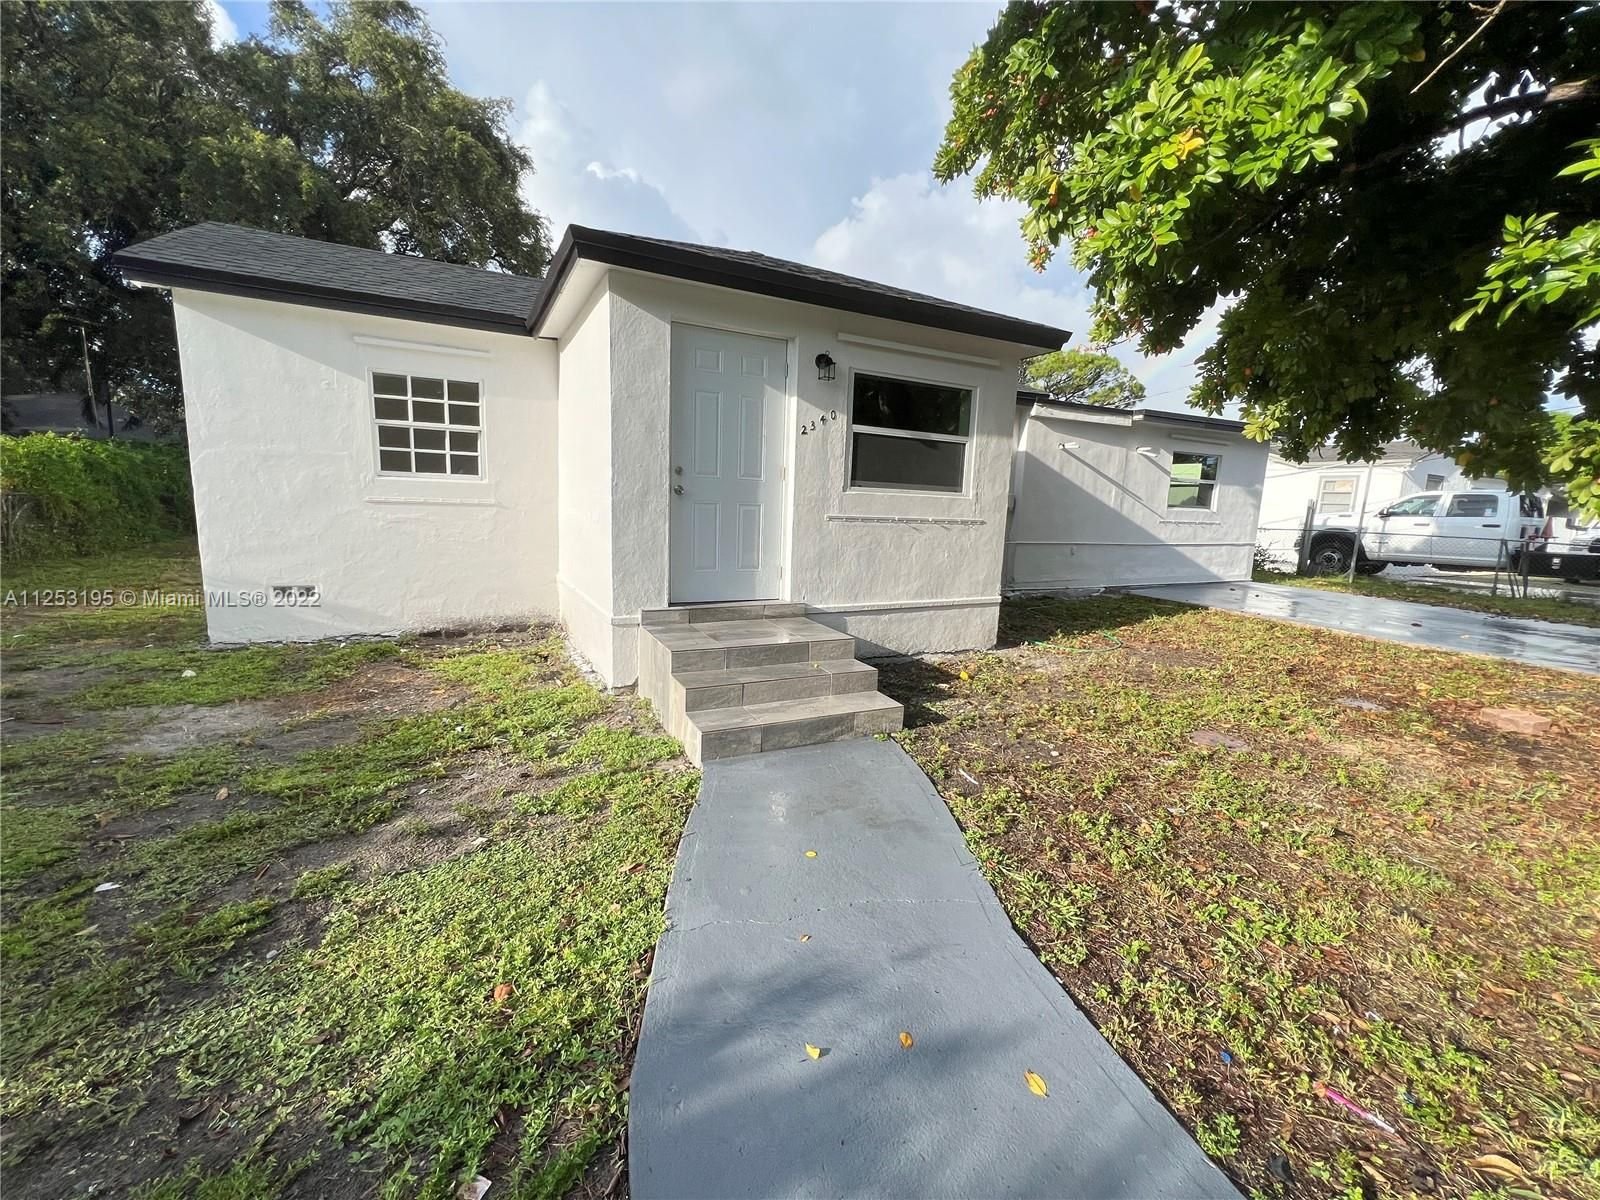 Real estate property located at 2340 99th Ter, Miami-Dade County, Miami, FL